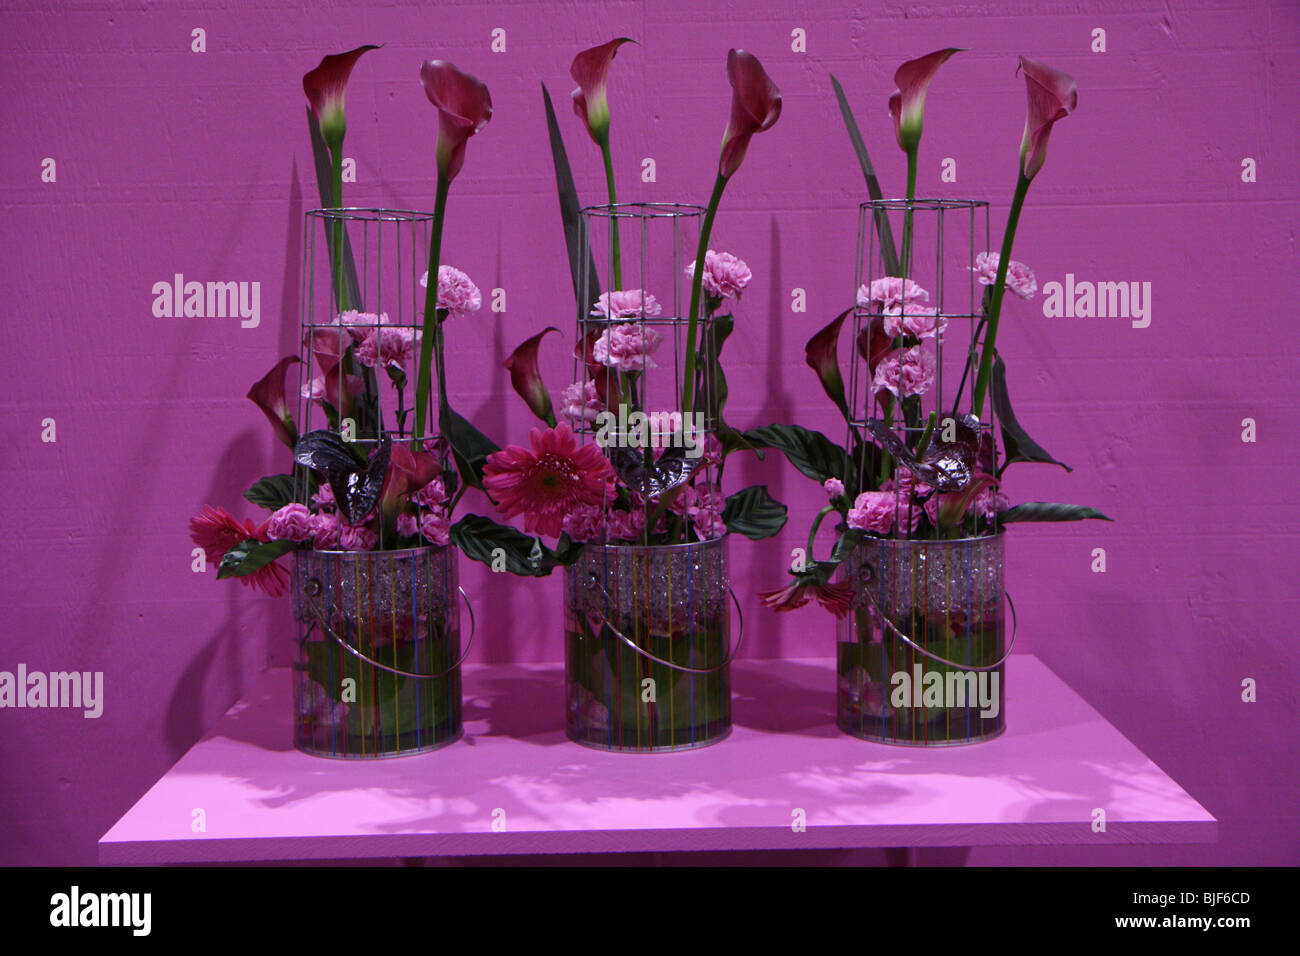 Bouquet flores florecen racimos de flores de regalo colorida decoración floral de fondo púrpura Foto de stock